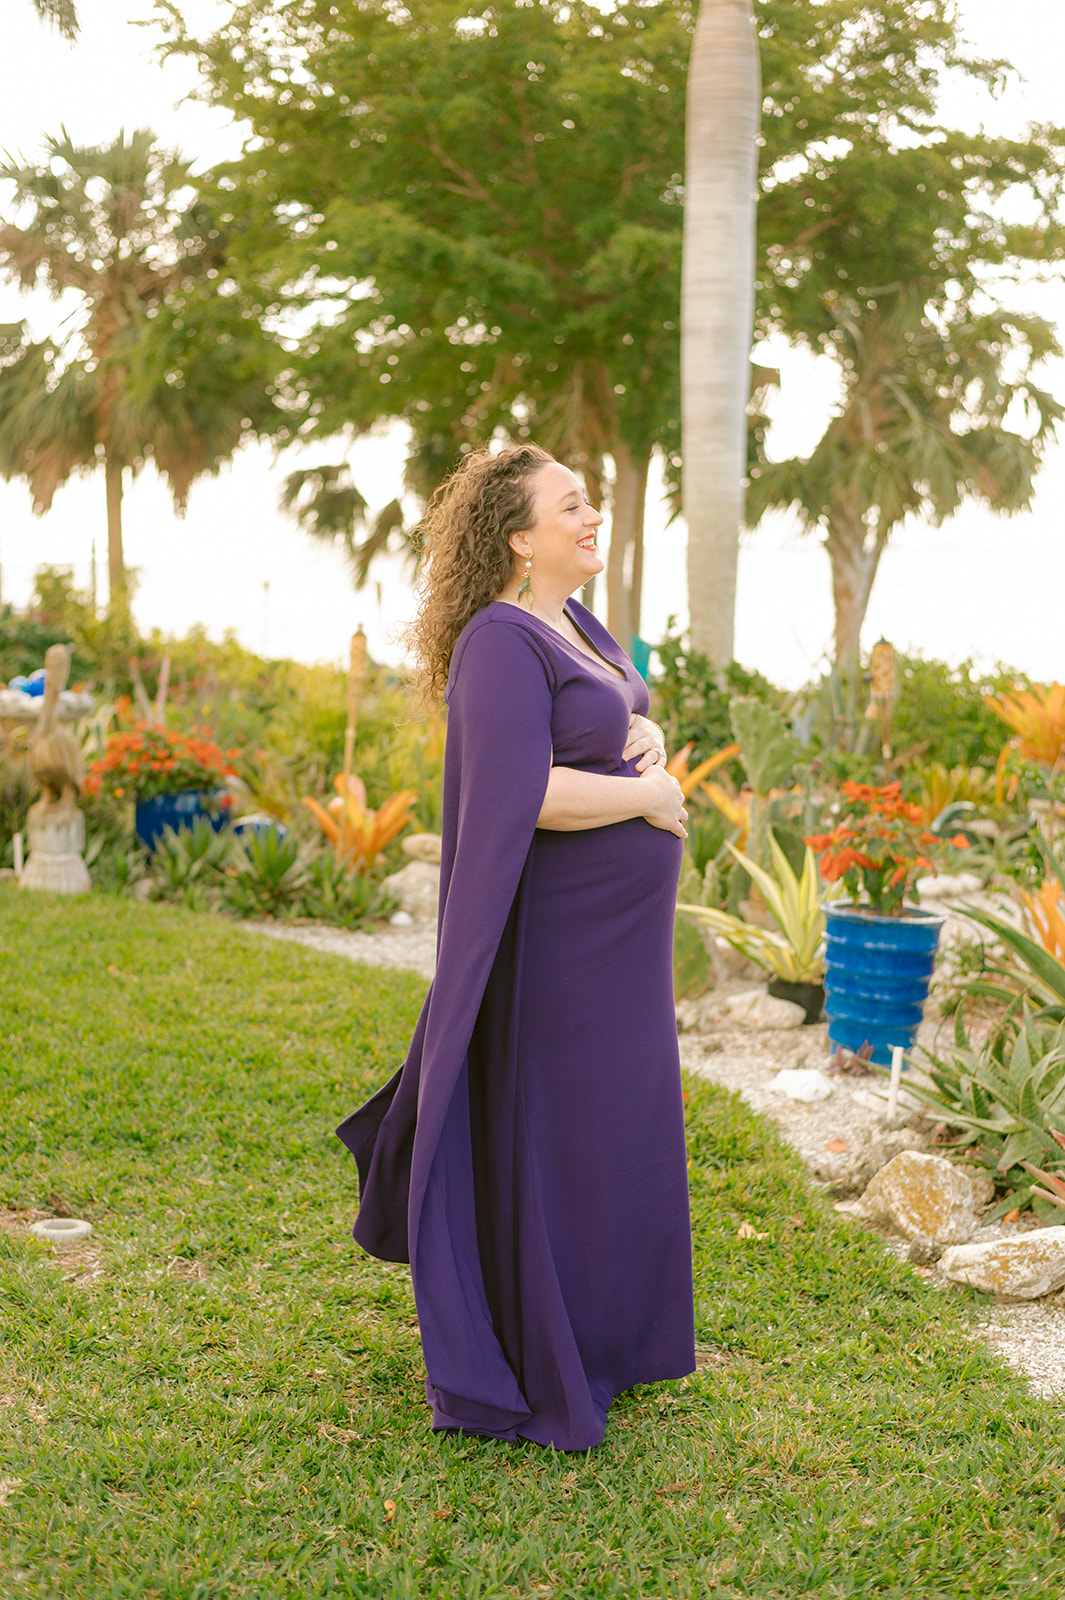 Naples Florida Maternity Photo Portrait Session
